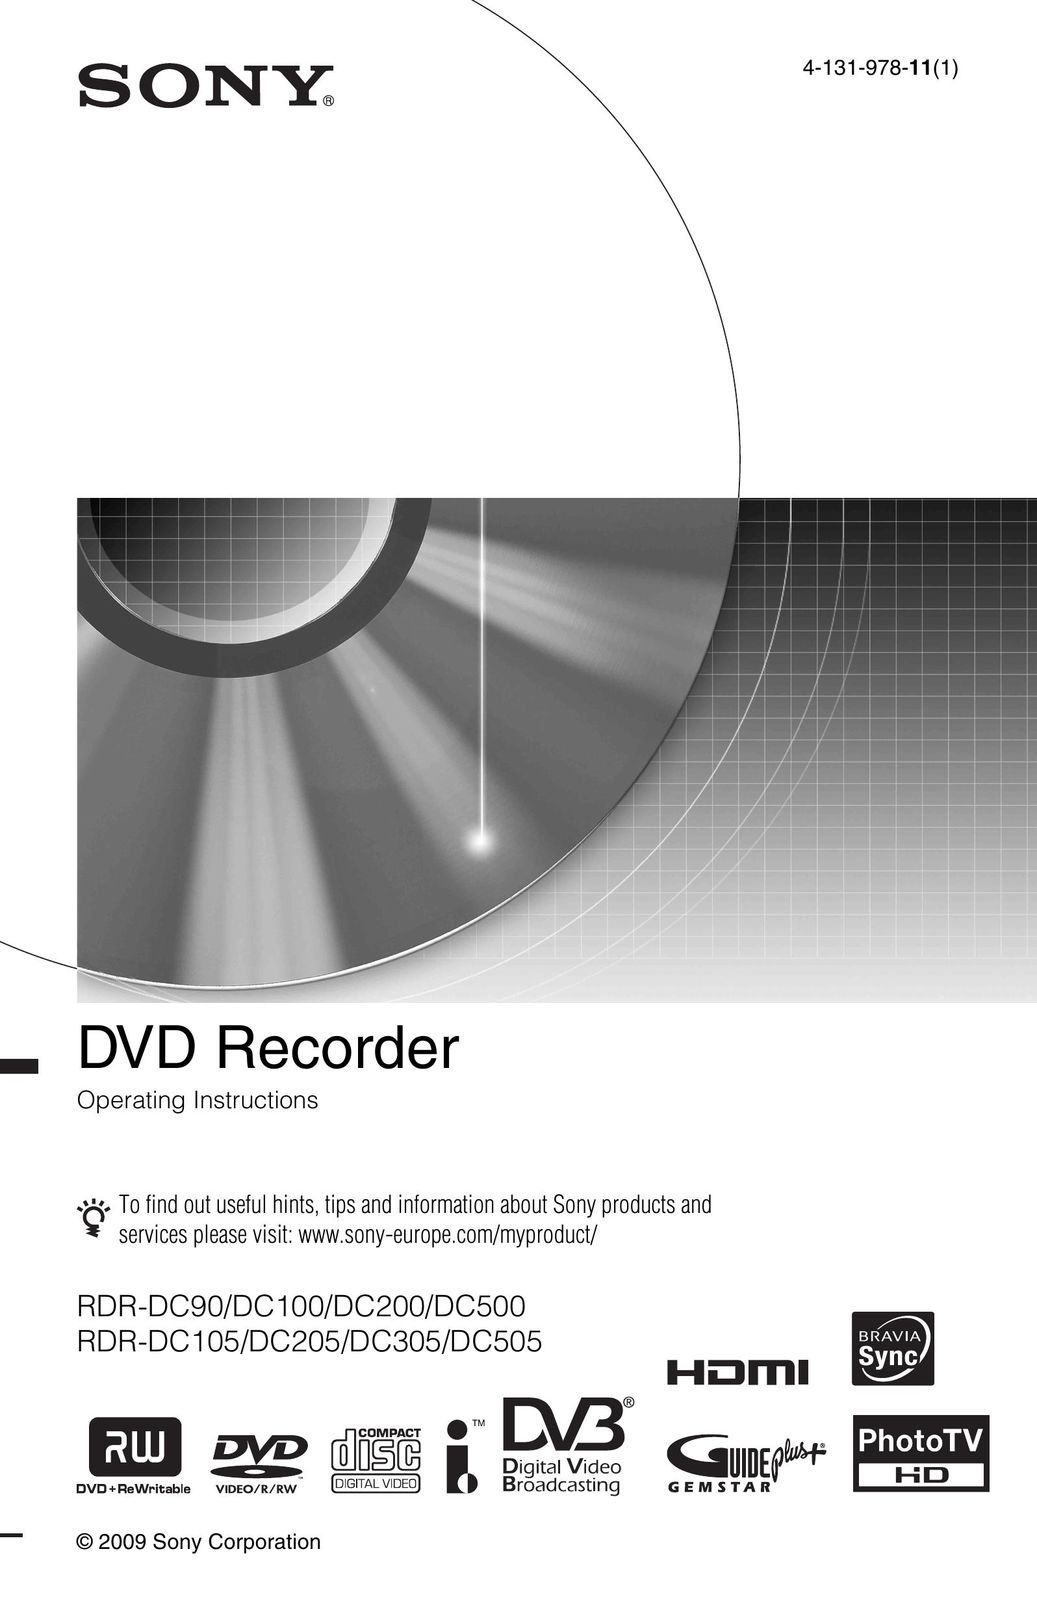 Sony 4-131-978-11(1) DVD Recorder User Manual